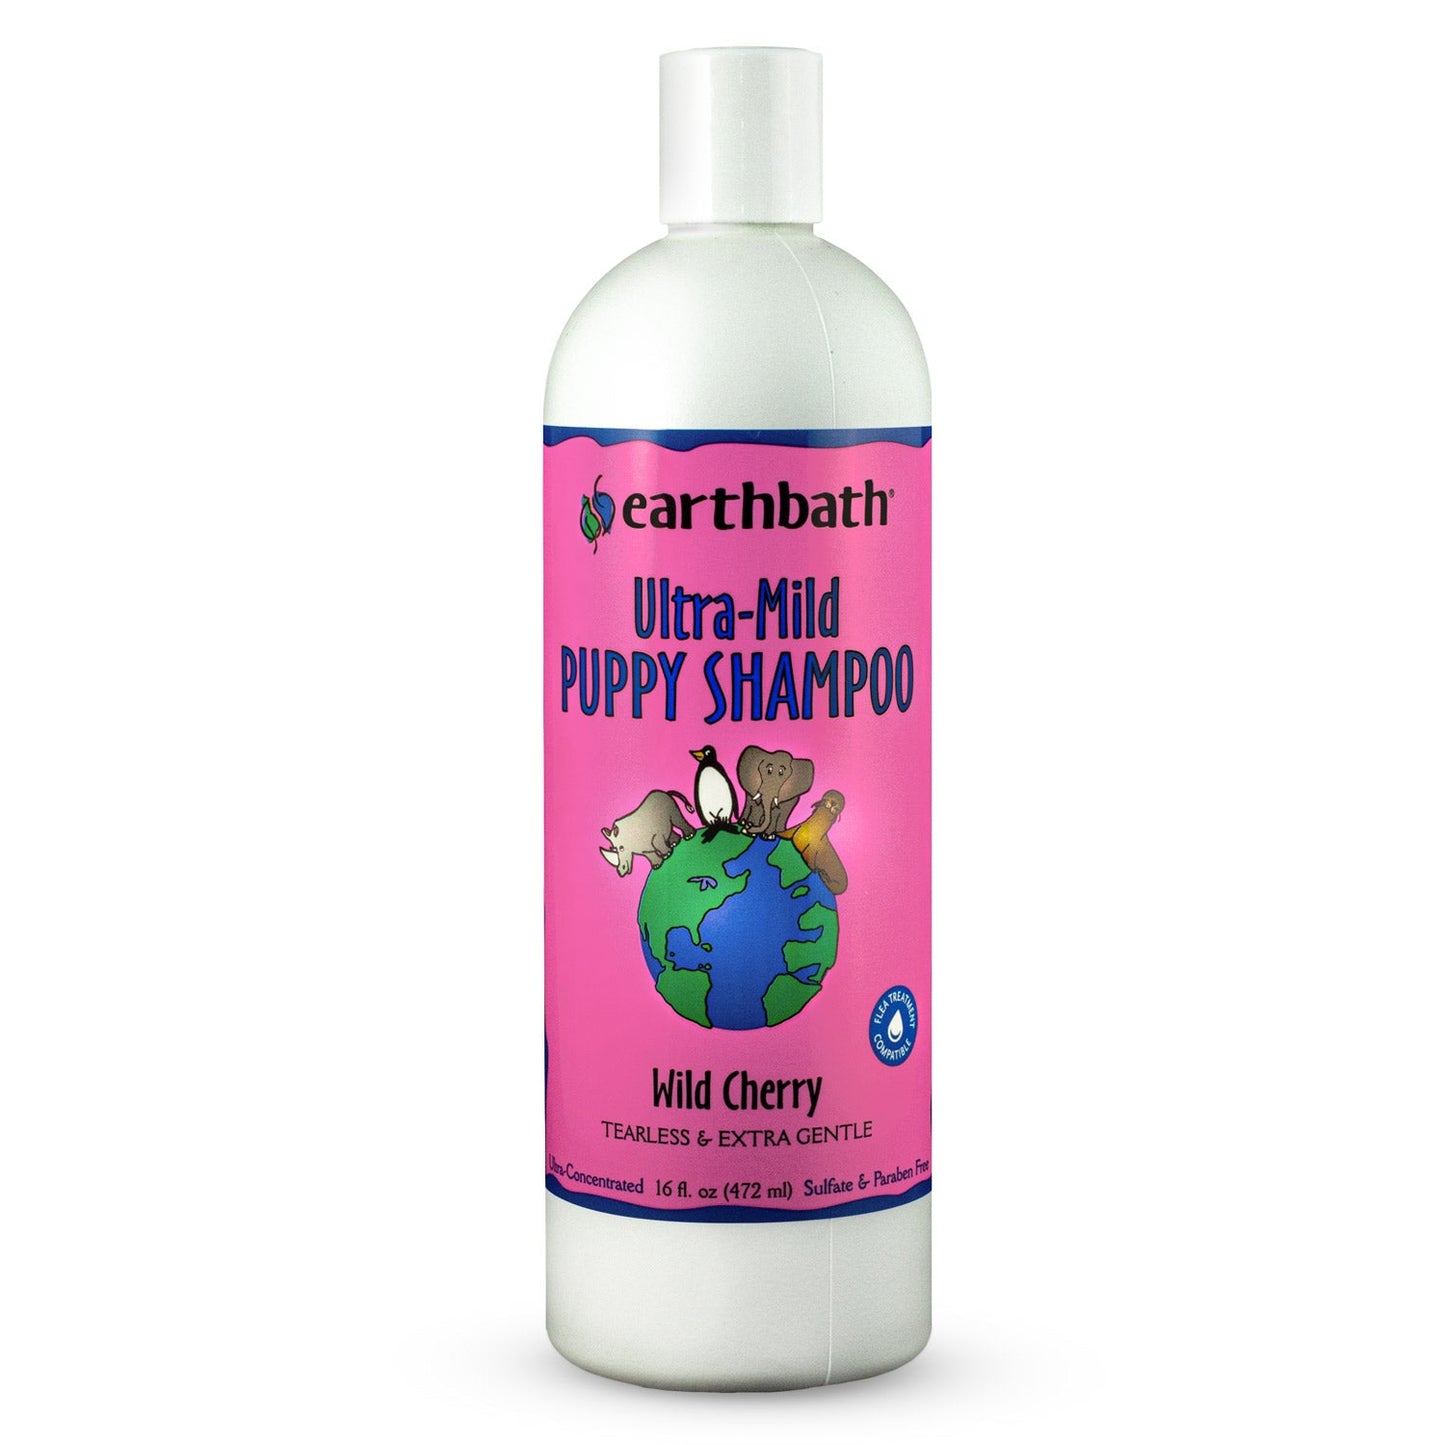 earthbath® Ultra-Mild Puppy Shampoo, Wild Cherry, Tearless & Extra Gentle